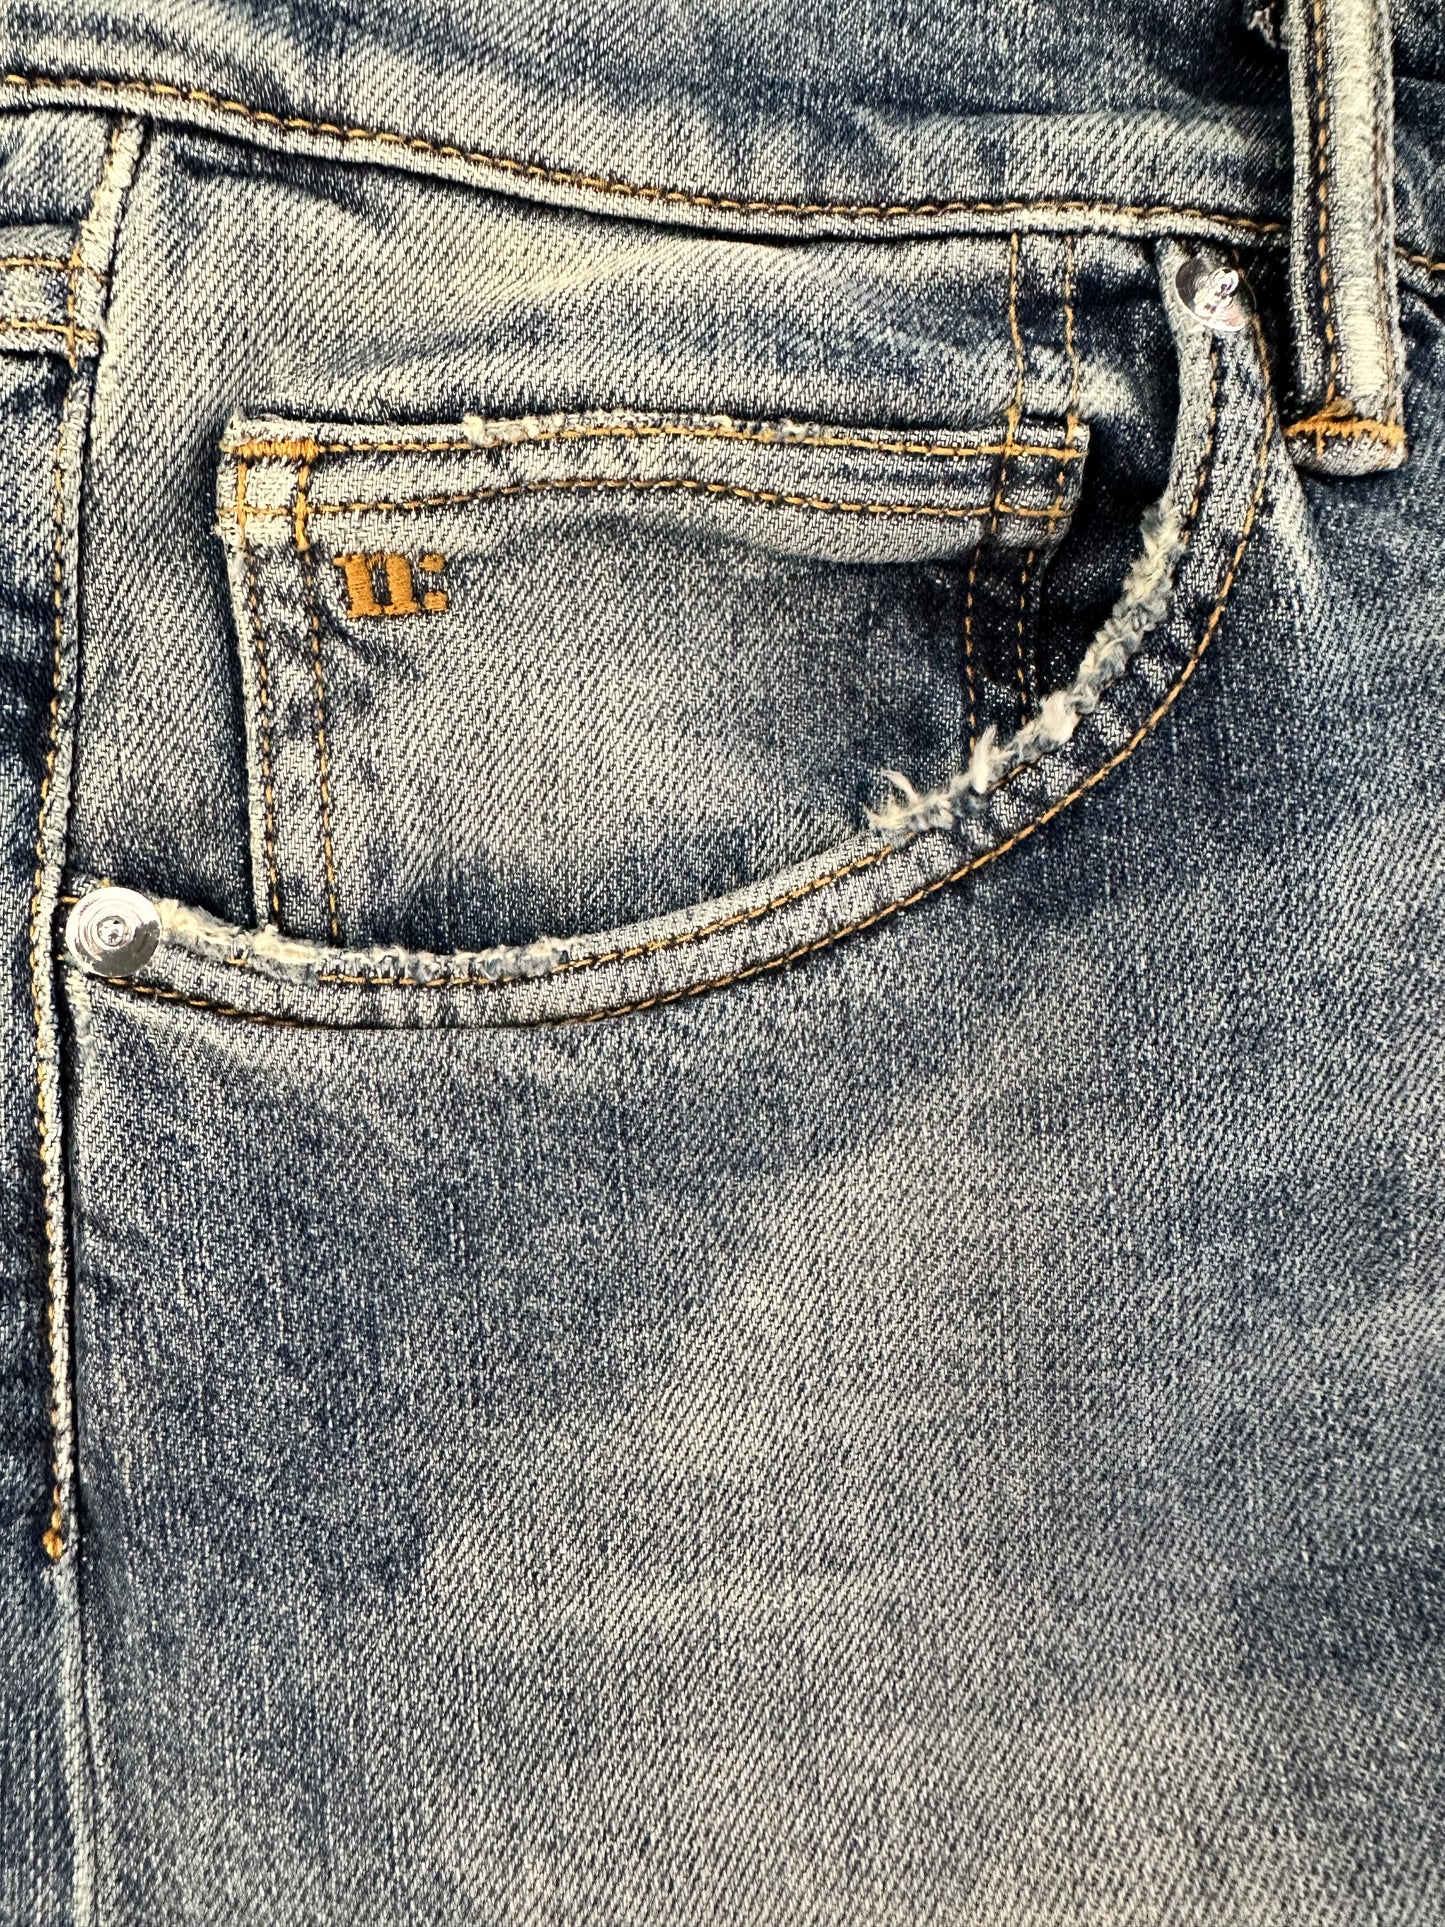 Nineinthemorning - Jeans Rock 5 Pocket Skinny Denim